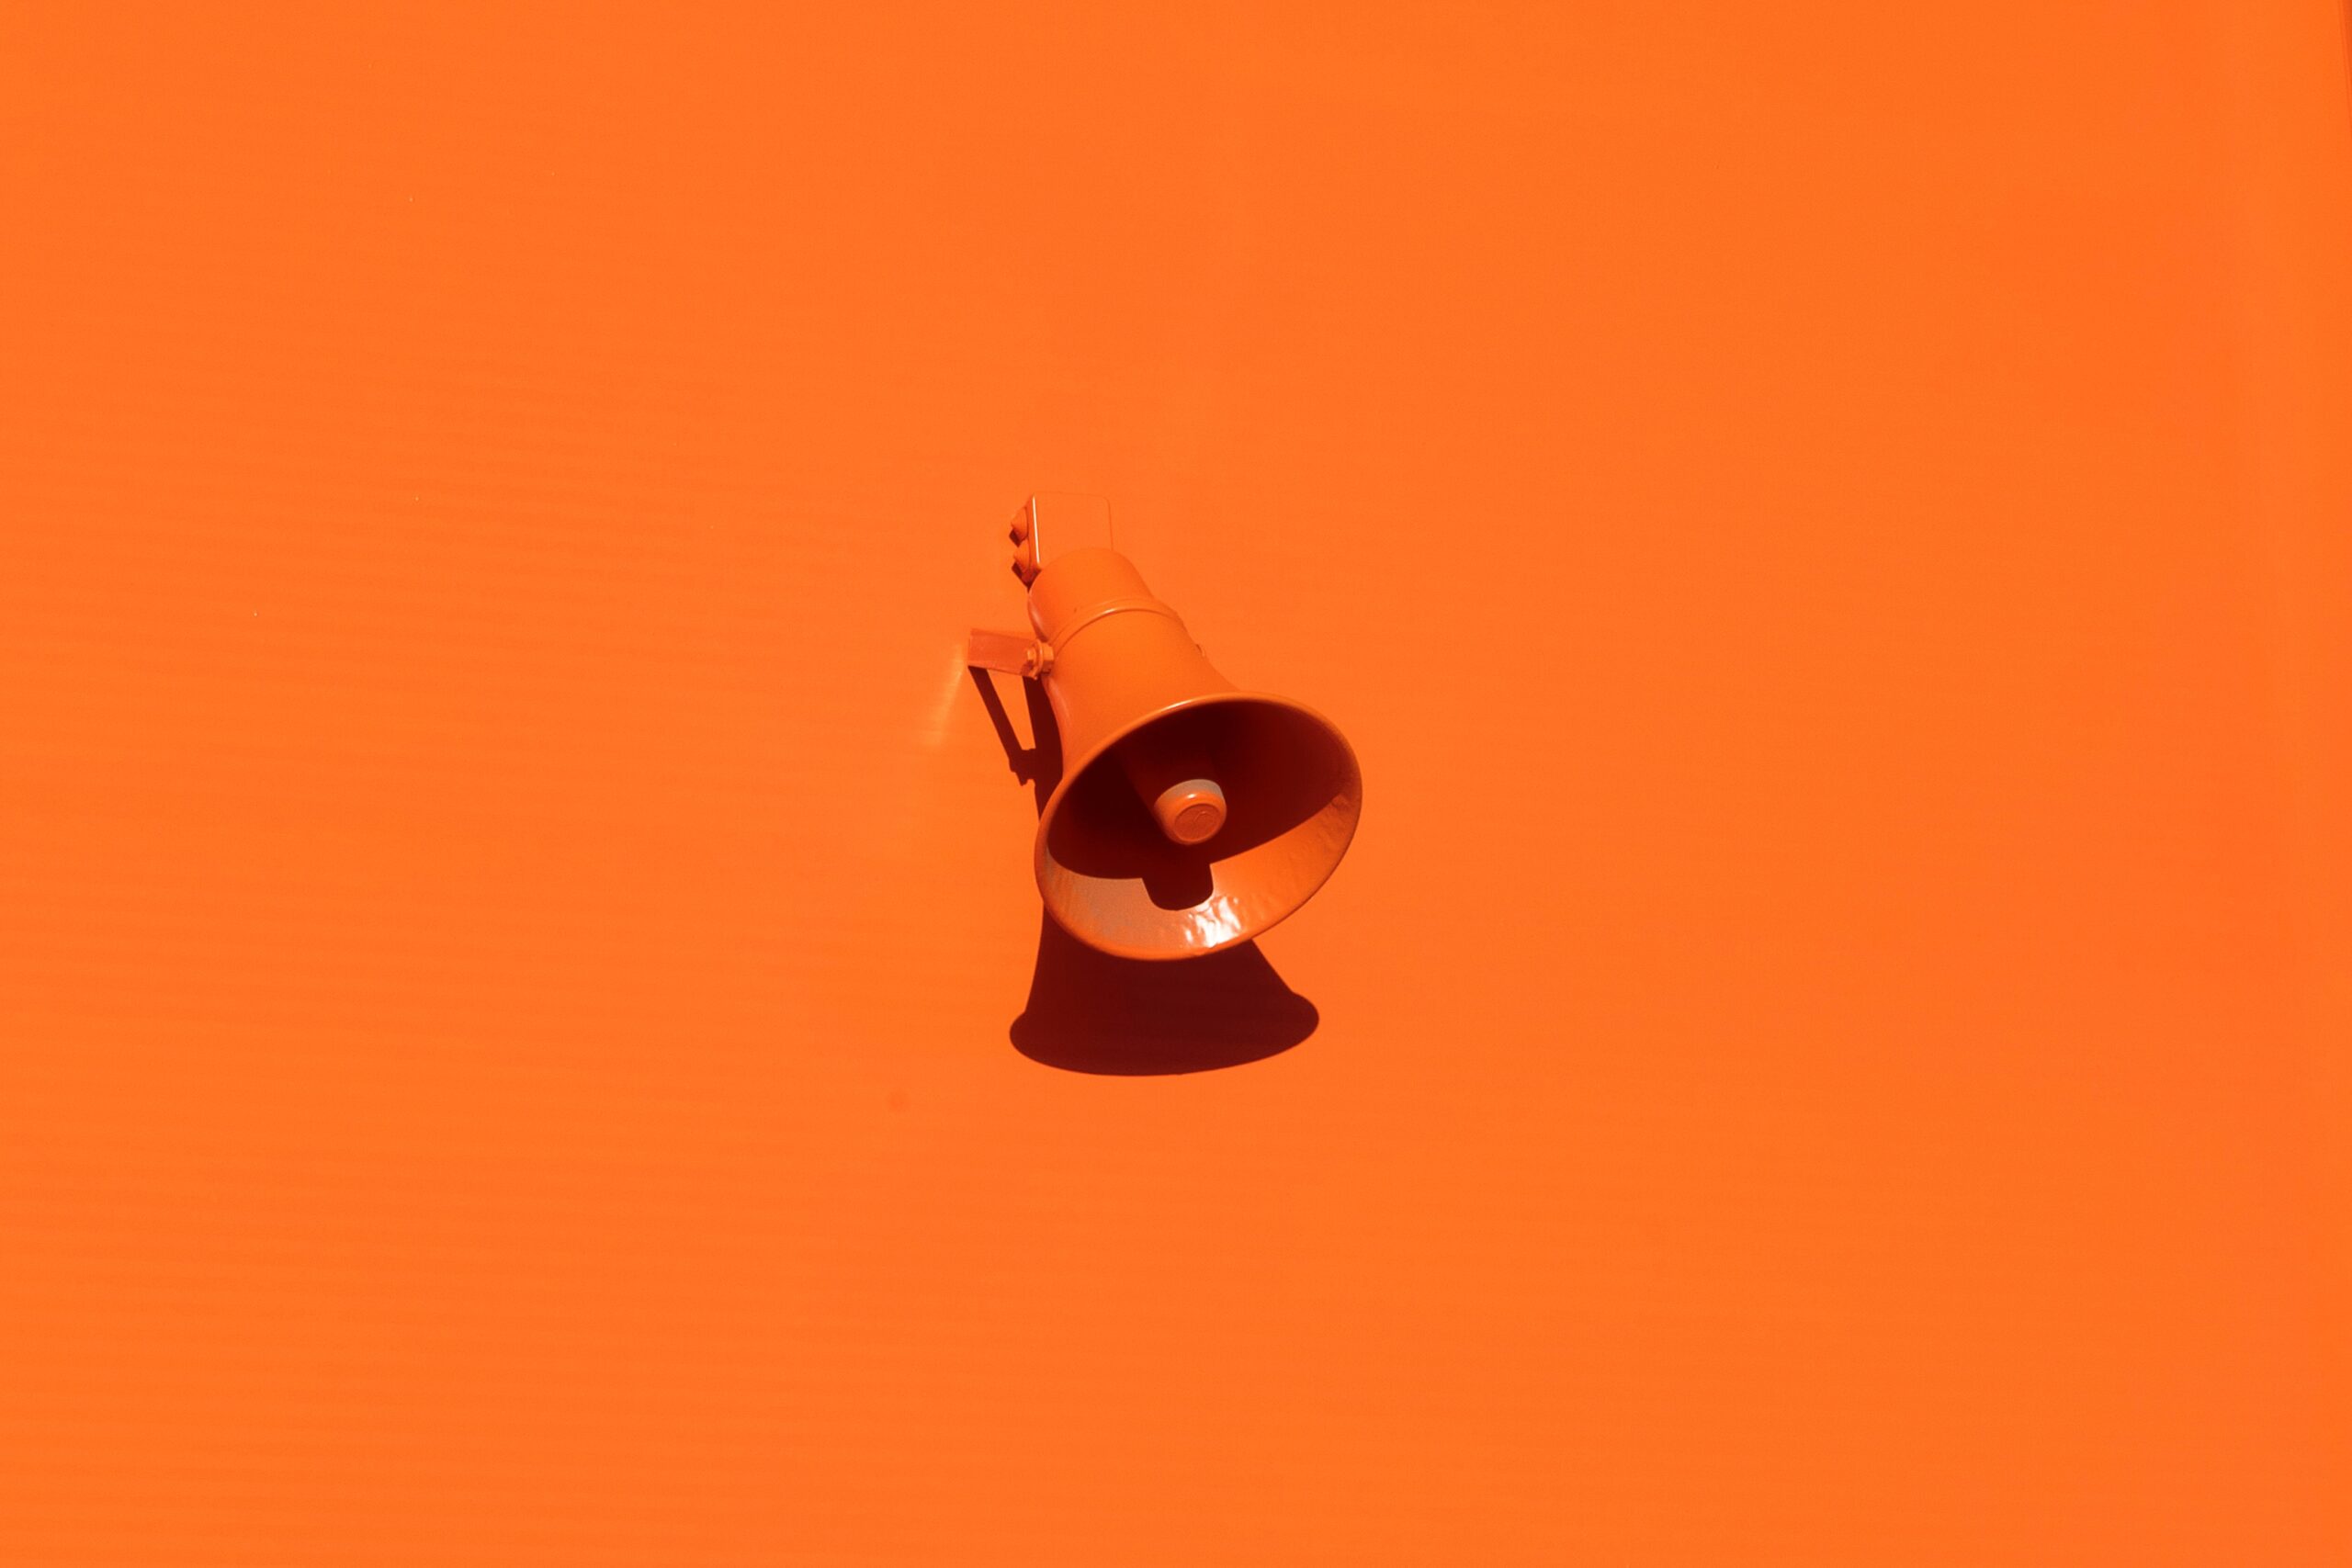 An orange bullhorn on a an orange background